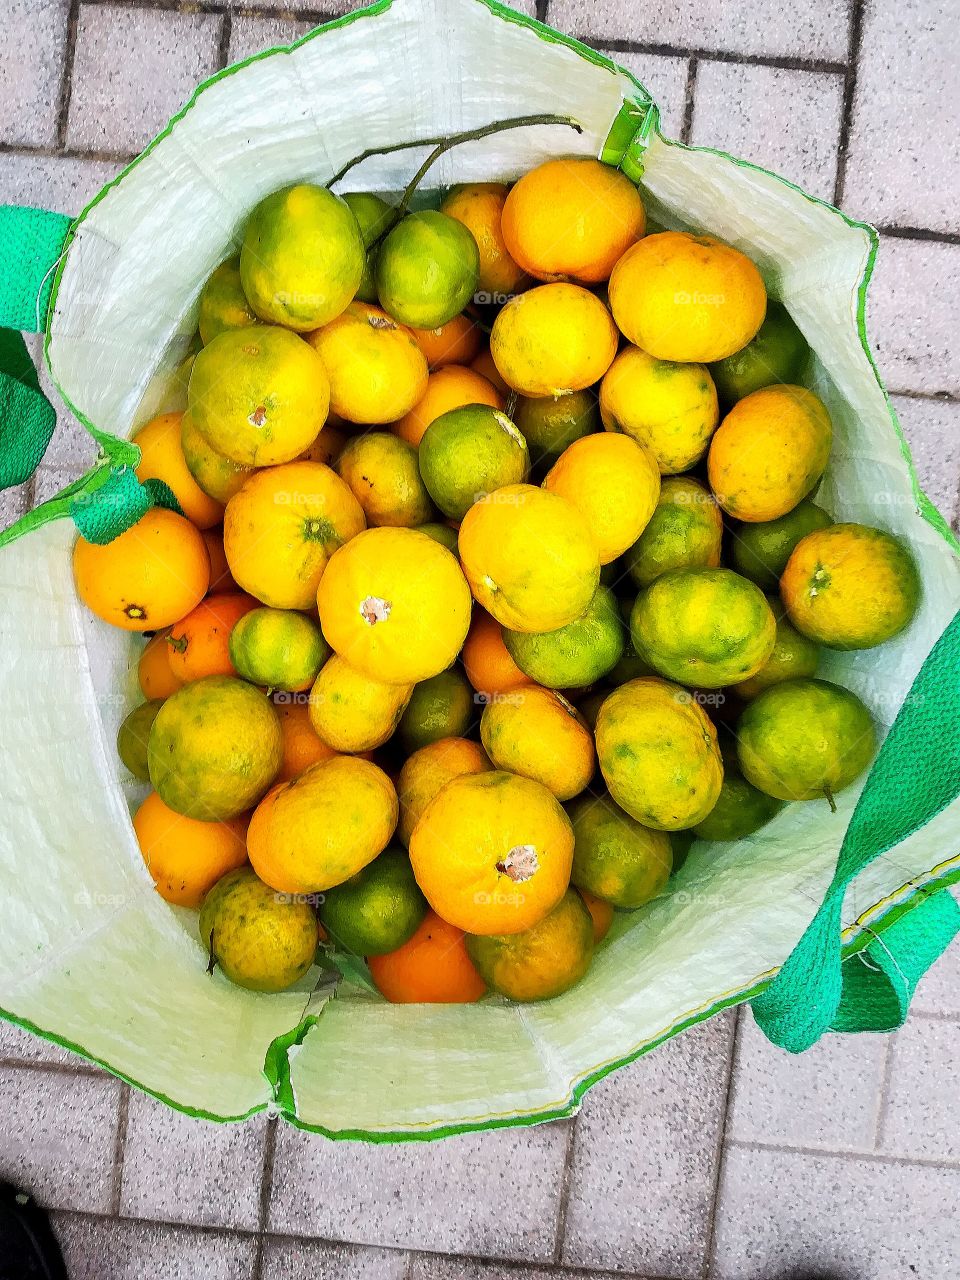 Lemons & oranges